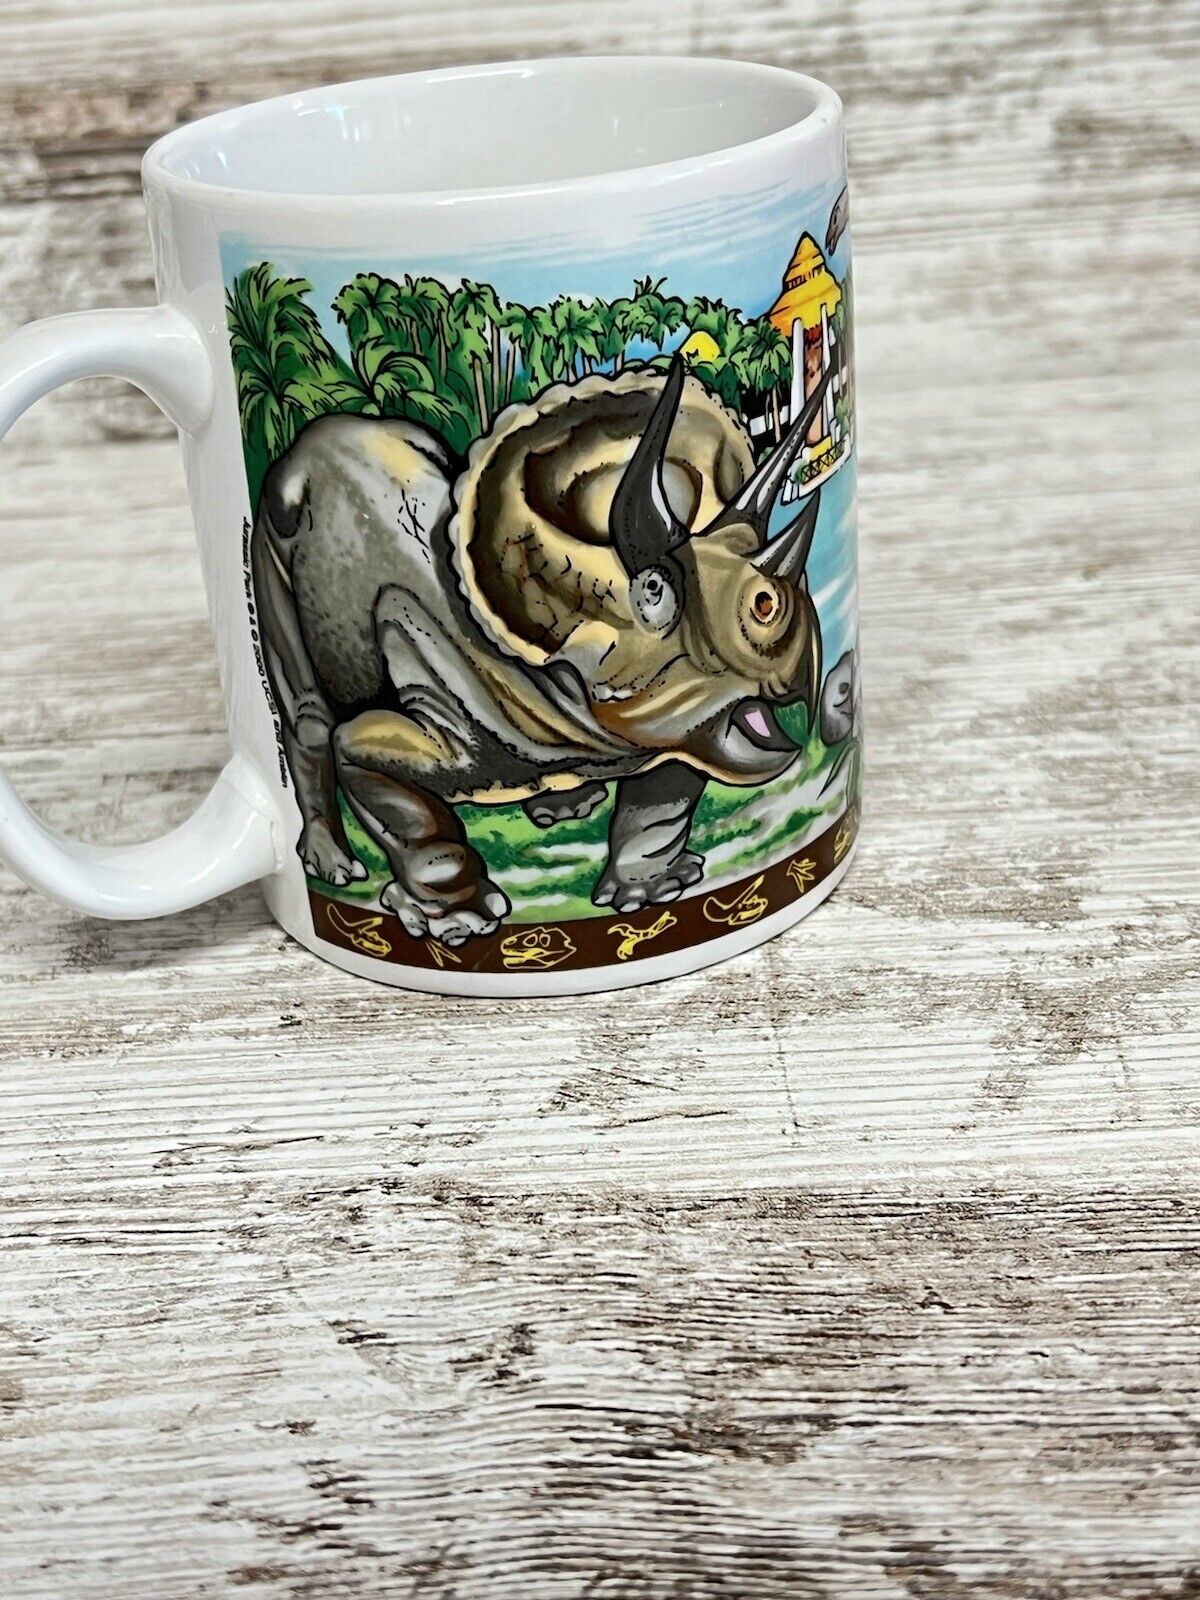 Jurassic Park Coffee Cup/Mug 2000 Universal Studios “Gary” Name on Cup